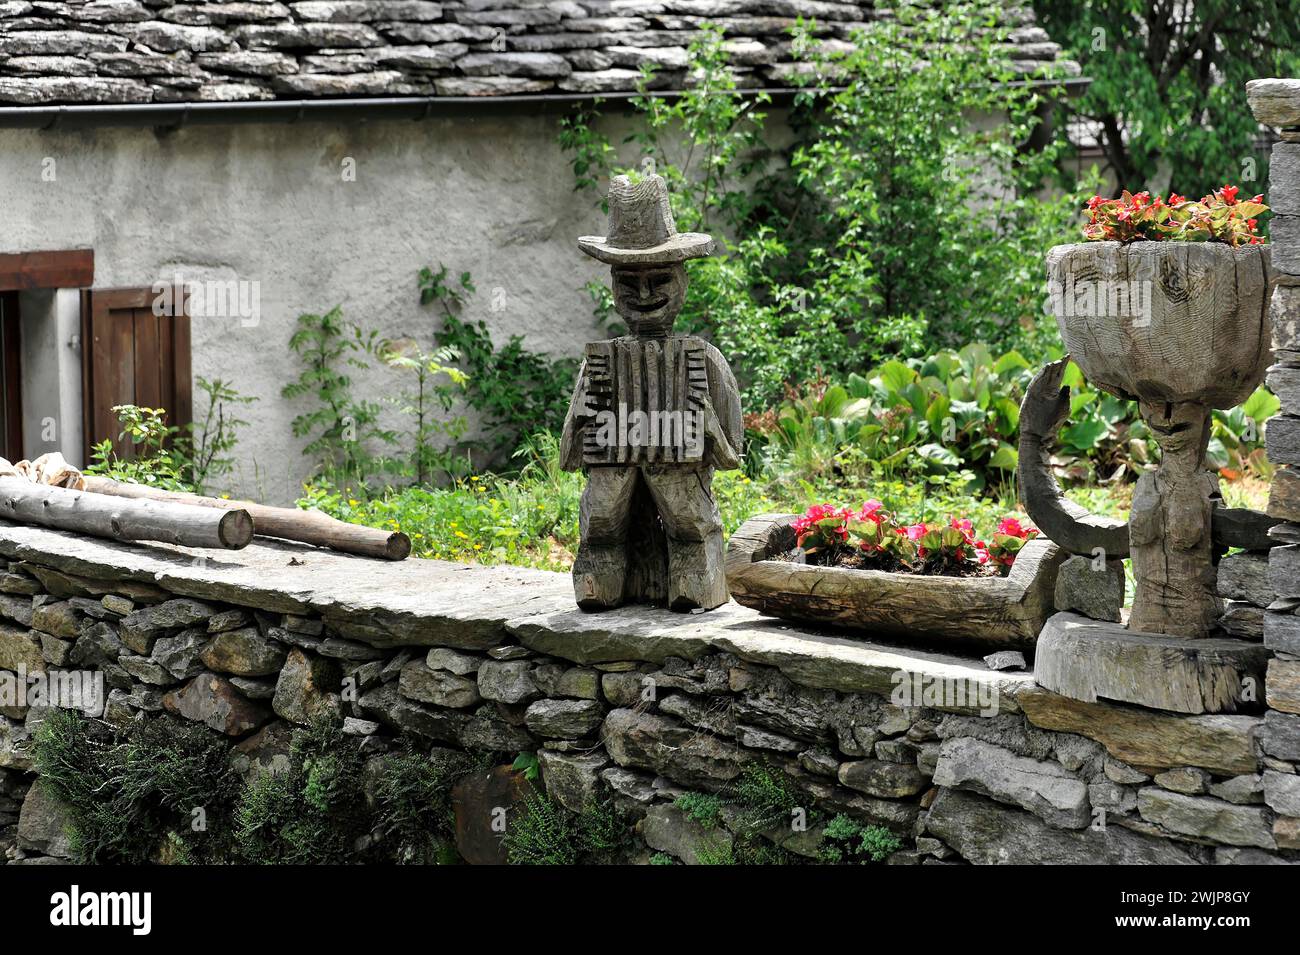 The village of Sonogno, 918m, in the Verzasca Valley, Valle Verzasca, Canton Ticino, Switzerland Stock Photo